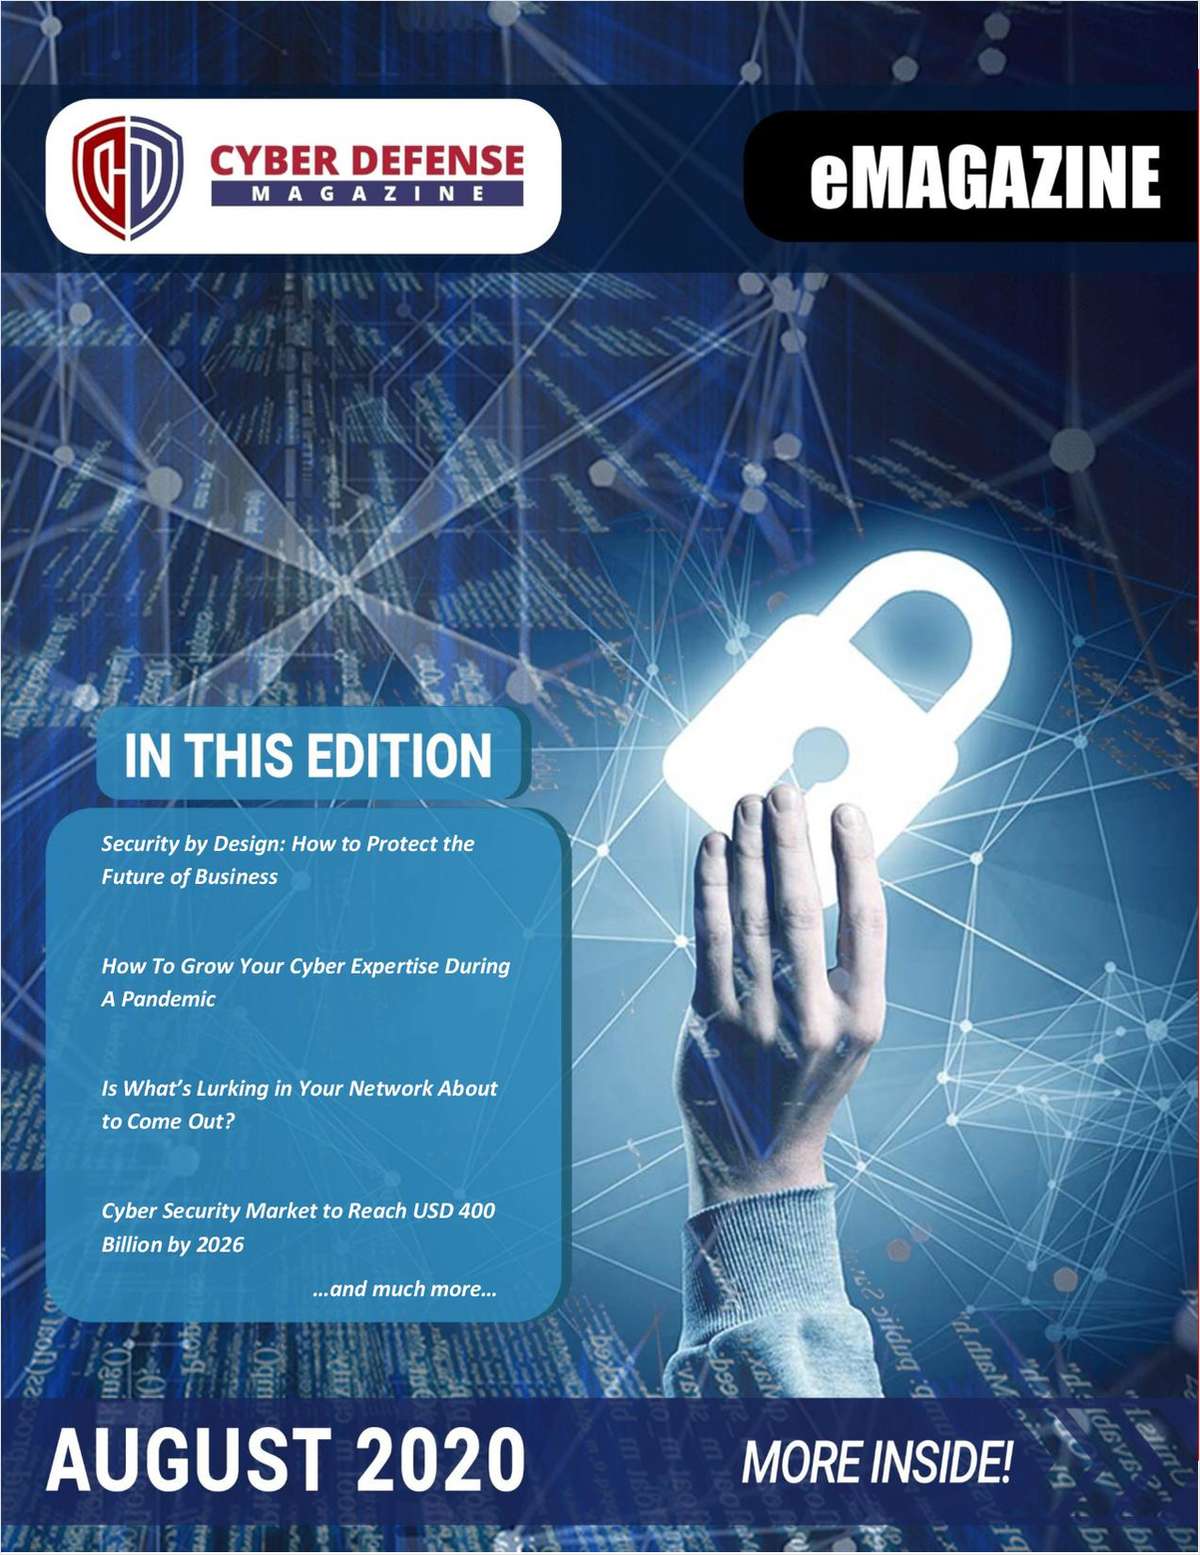 Cyber Defense Magazine August 2020 Edition